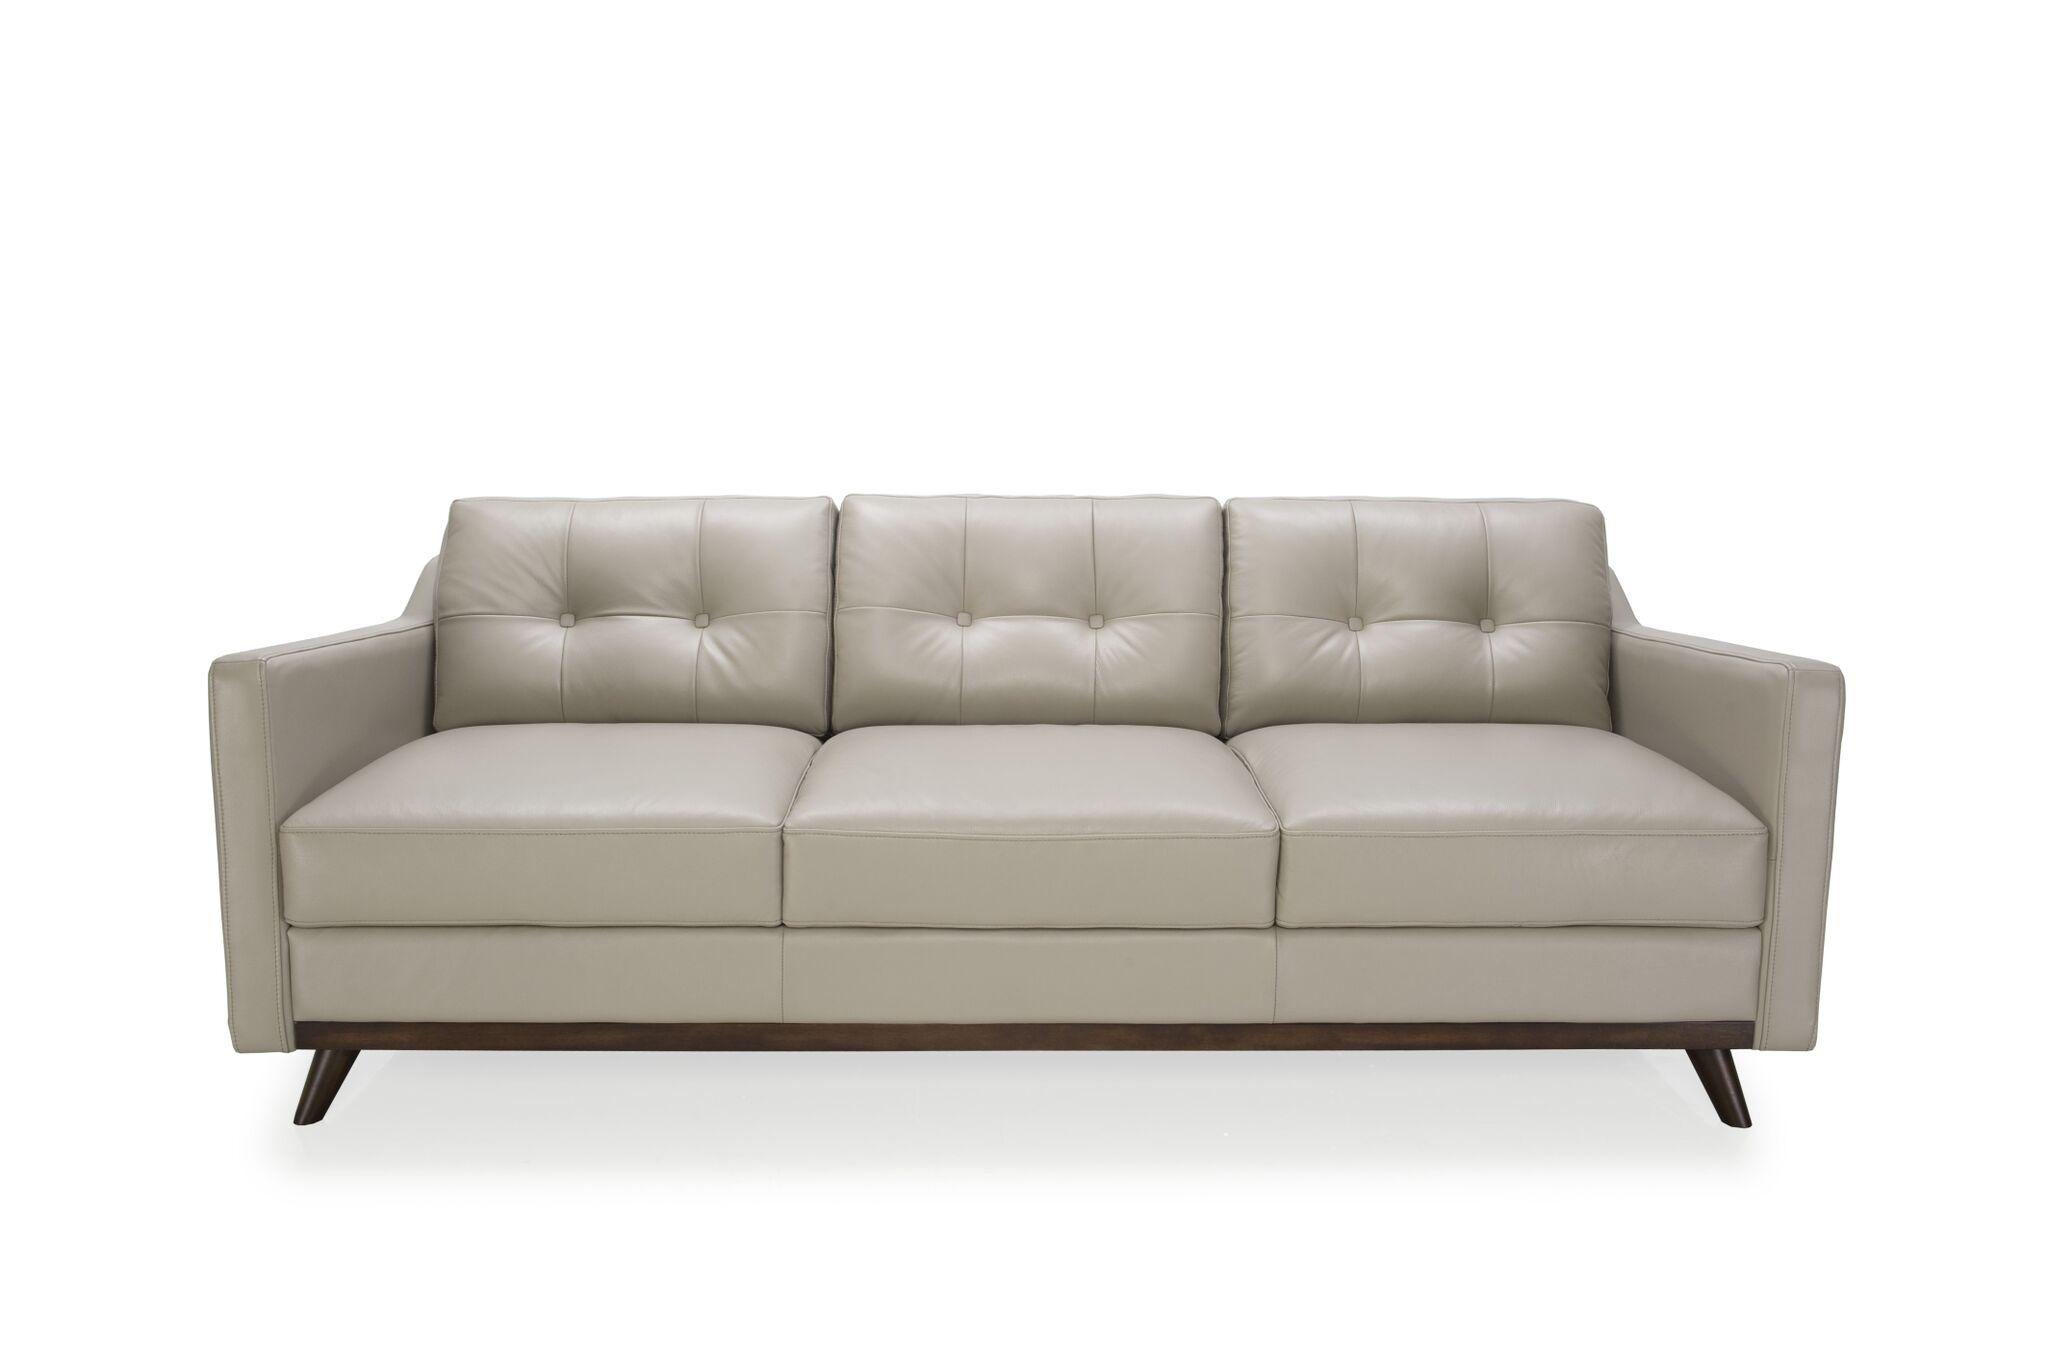 

    
Argent Top Grain Leather Upholstery Mid-Century Sofa Set 3 Pcs Moroni Monika 359
